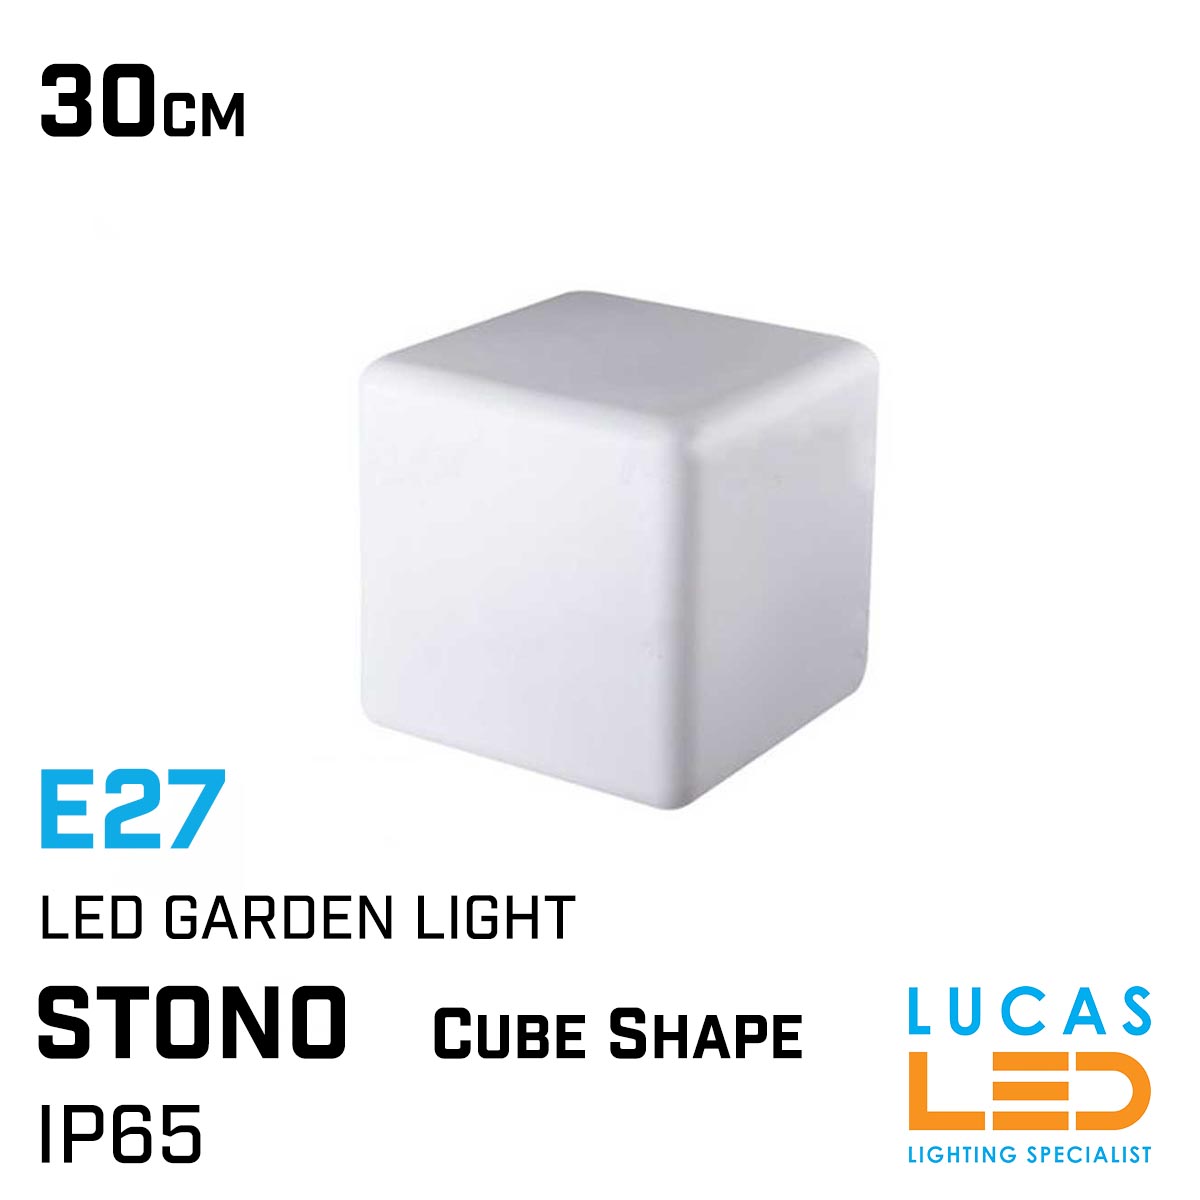 LAST 5 pcs ONLY  -  Outdoor LED Garden Decor table light - E27 - IP65 - STONO Cube shape 30cm